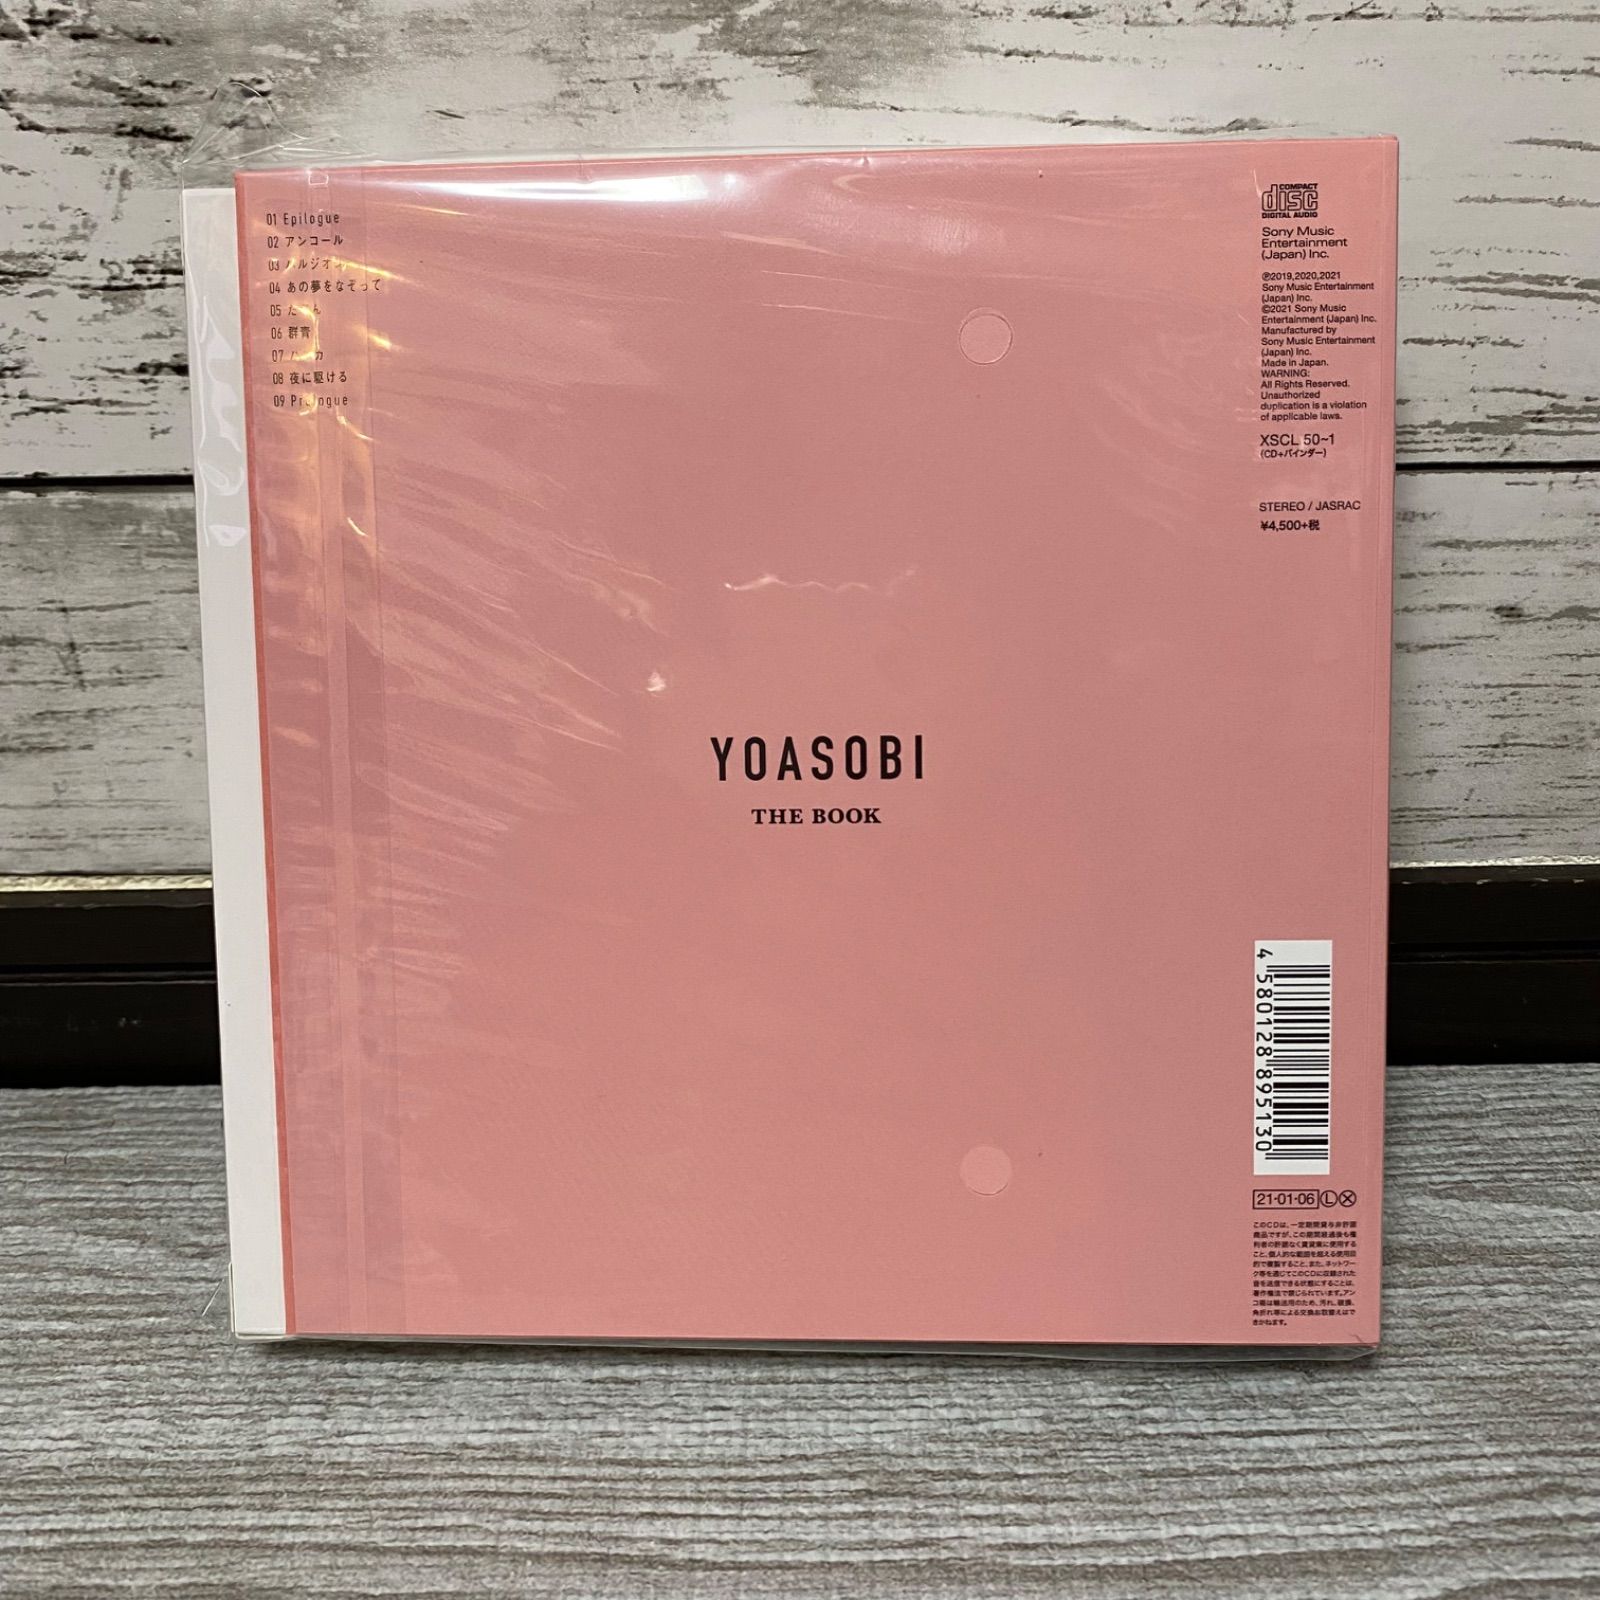 THE BOOK YOASOBI 完全生産限定盤 CD＋付属品 特典なしブック